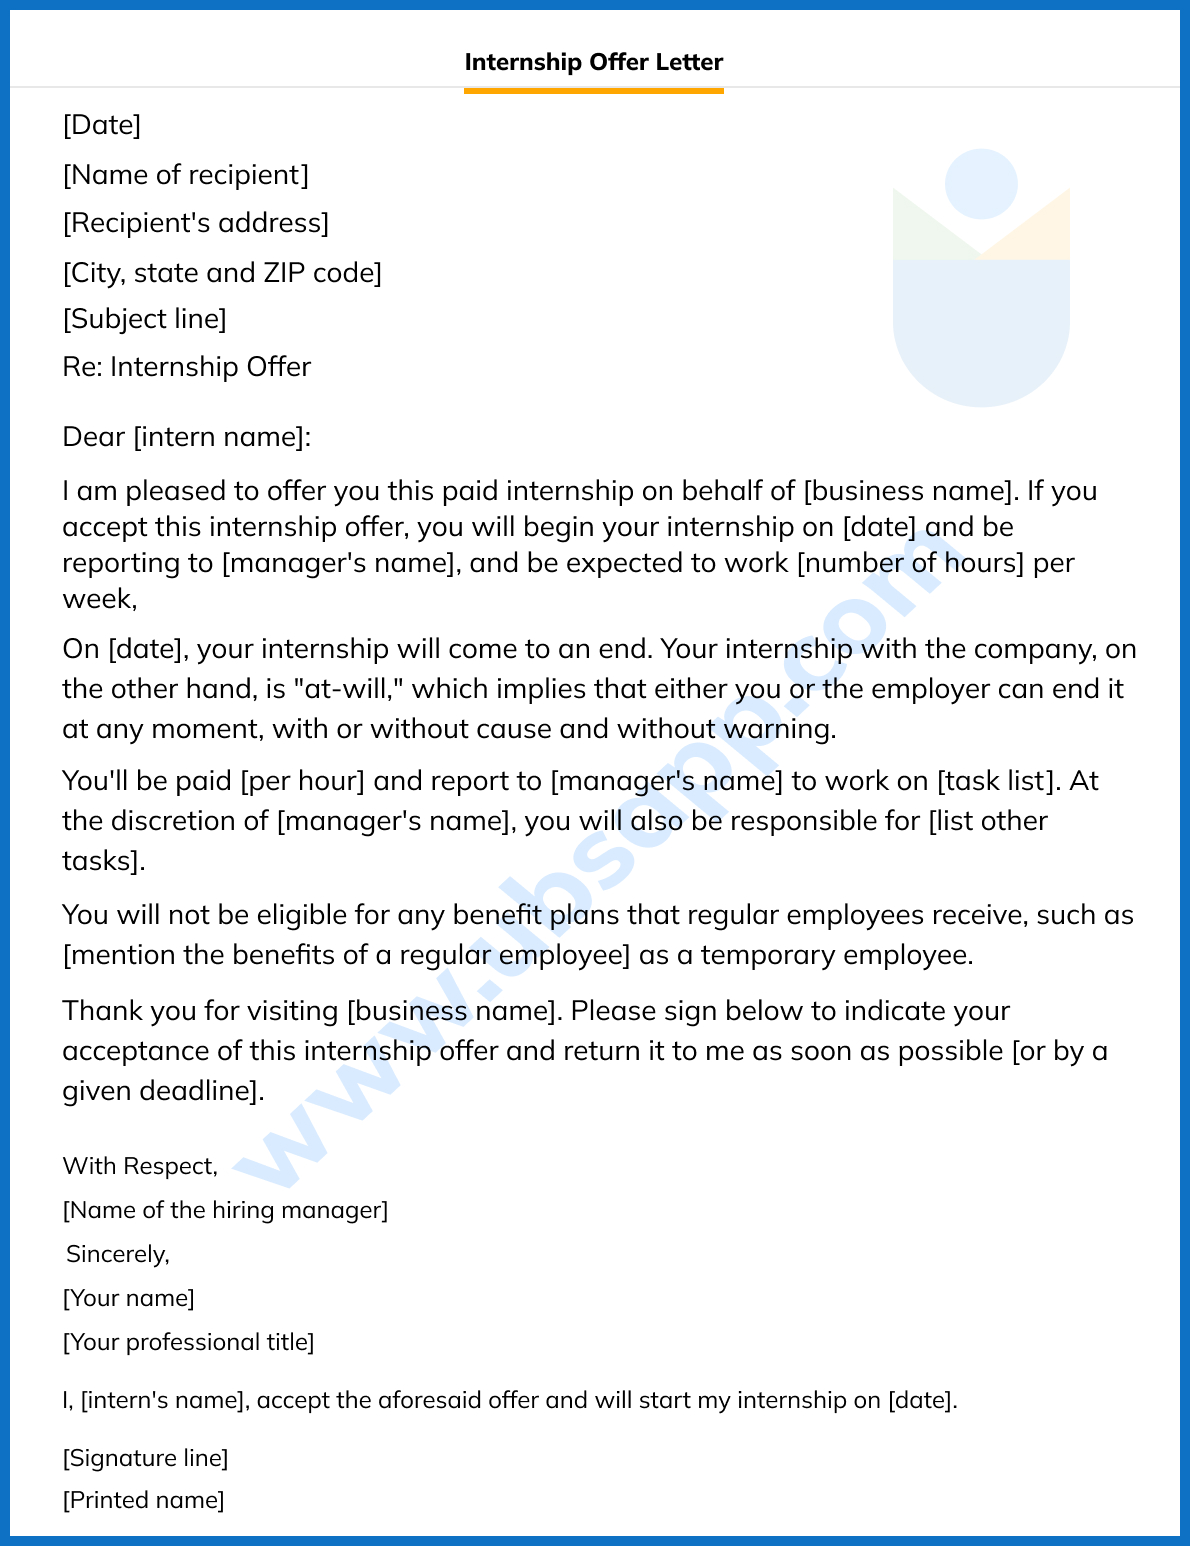 Internship Offer Letter format